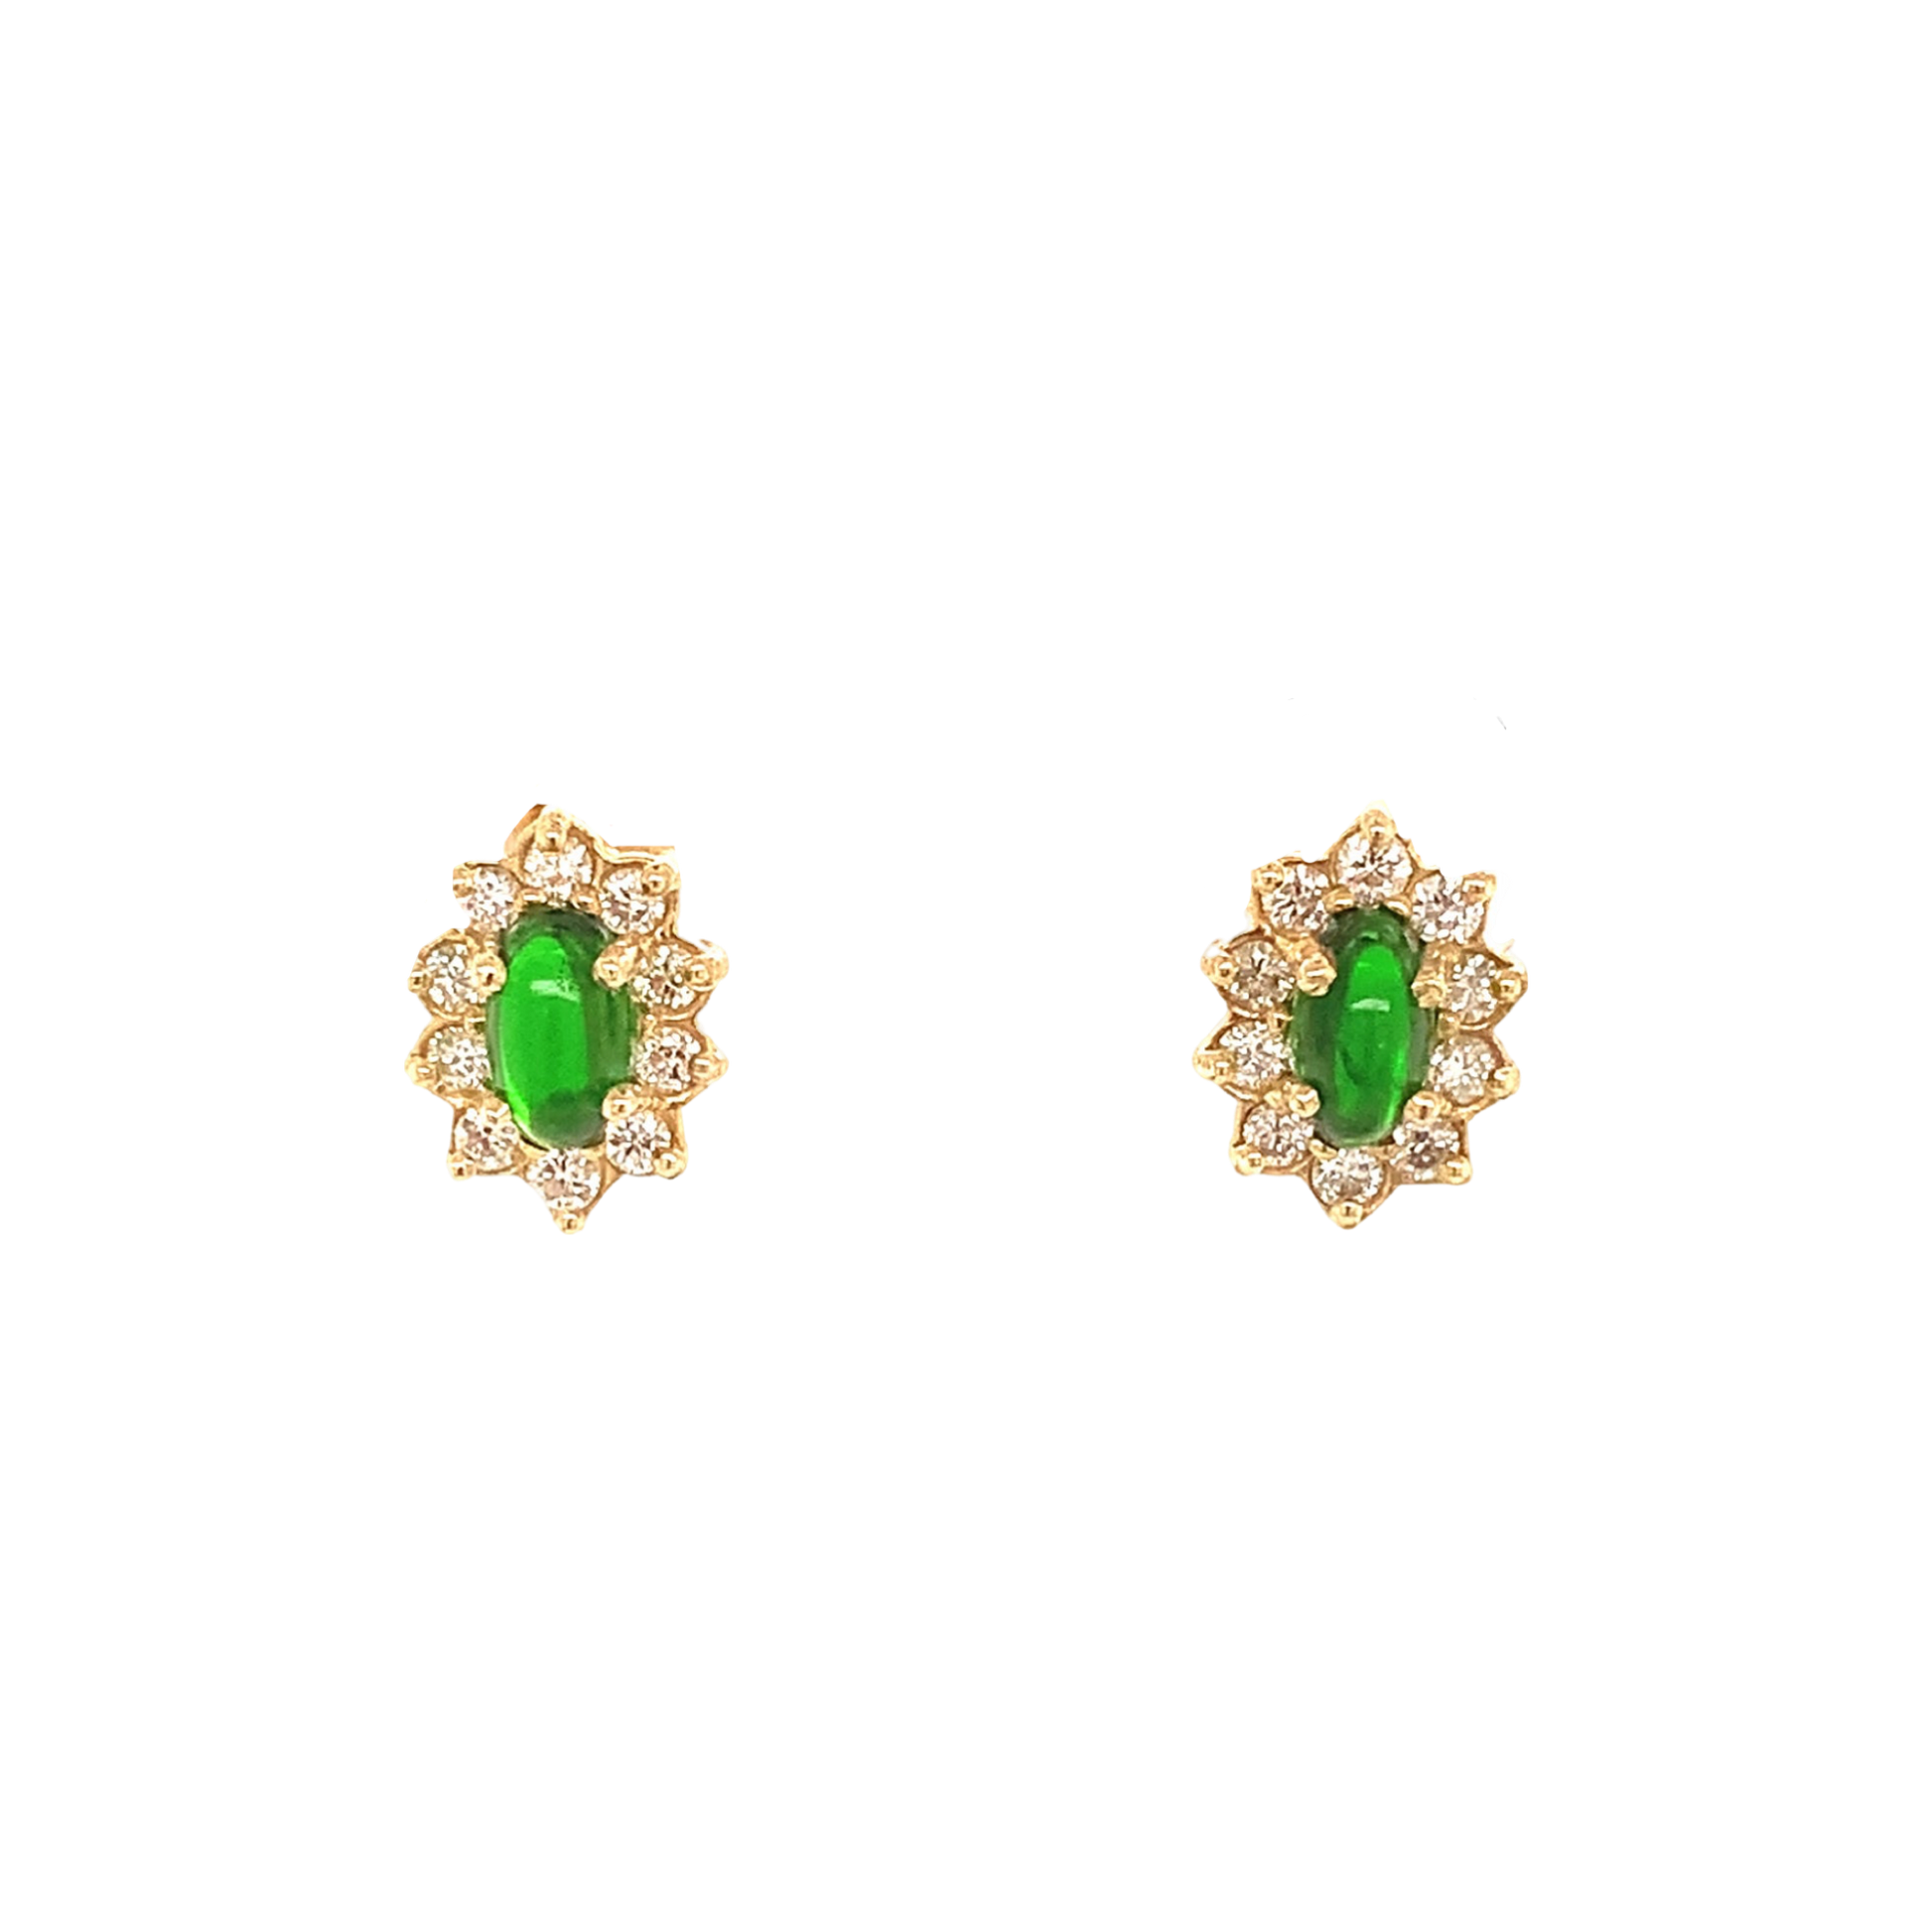 Natural Tourmaline Diamond Earrings 14k Gold 0.85 TCW Certified $1,250 113472 - Certified Fine Jewelry